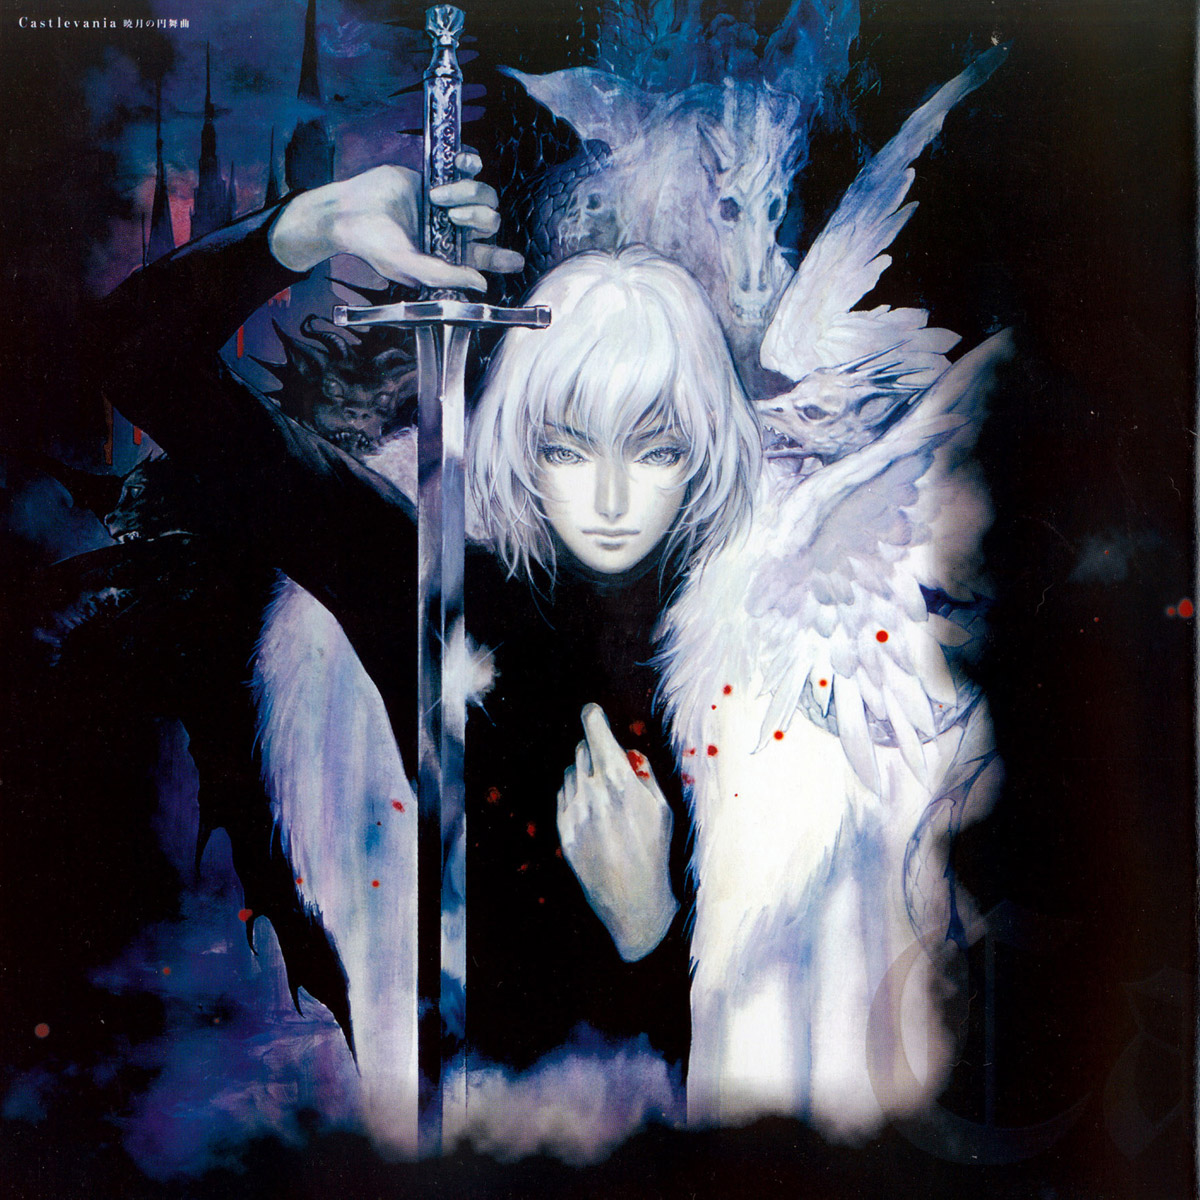 Castlevania: Aria of Sorrow image by Ayami Kojima